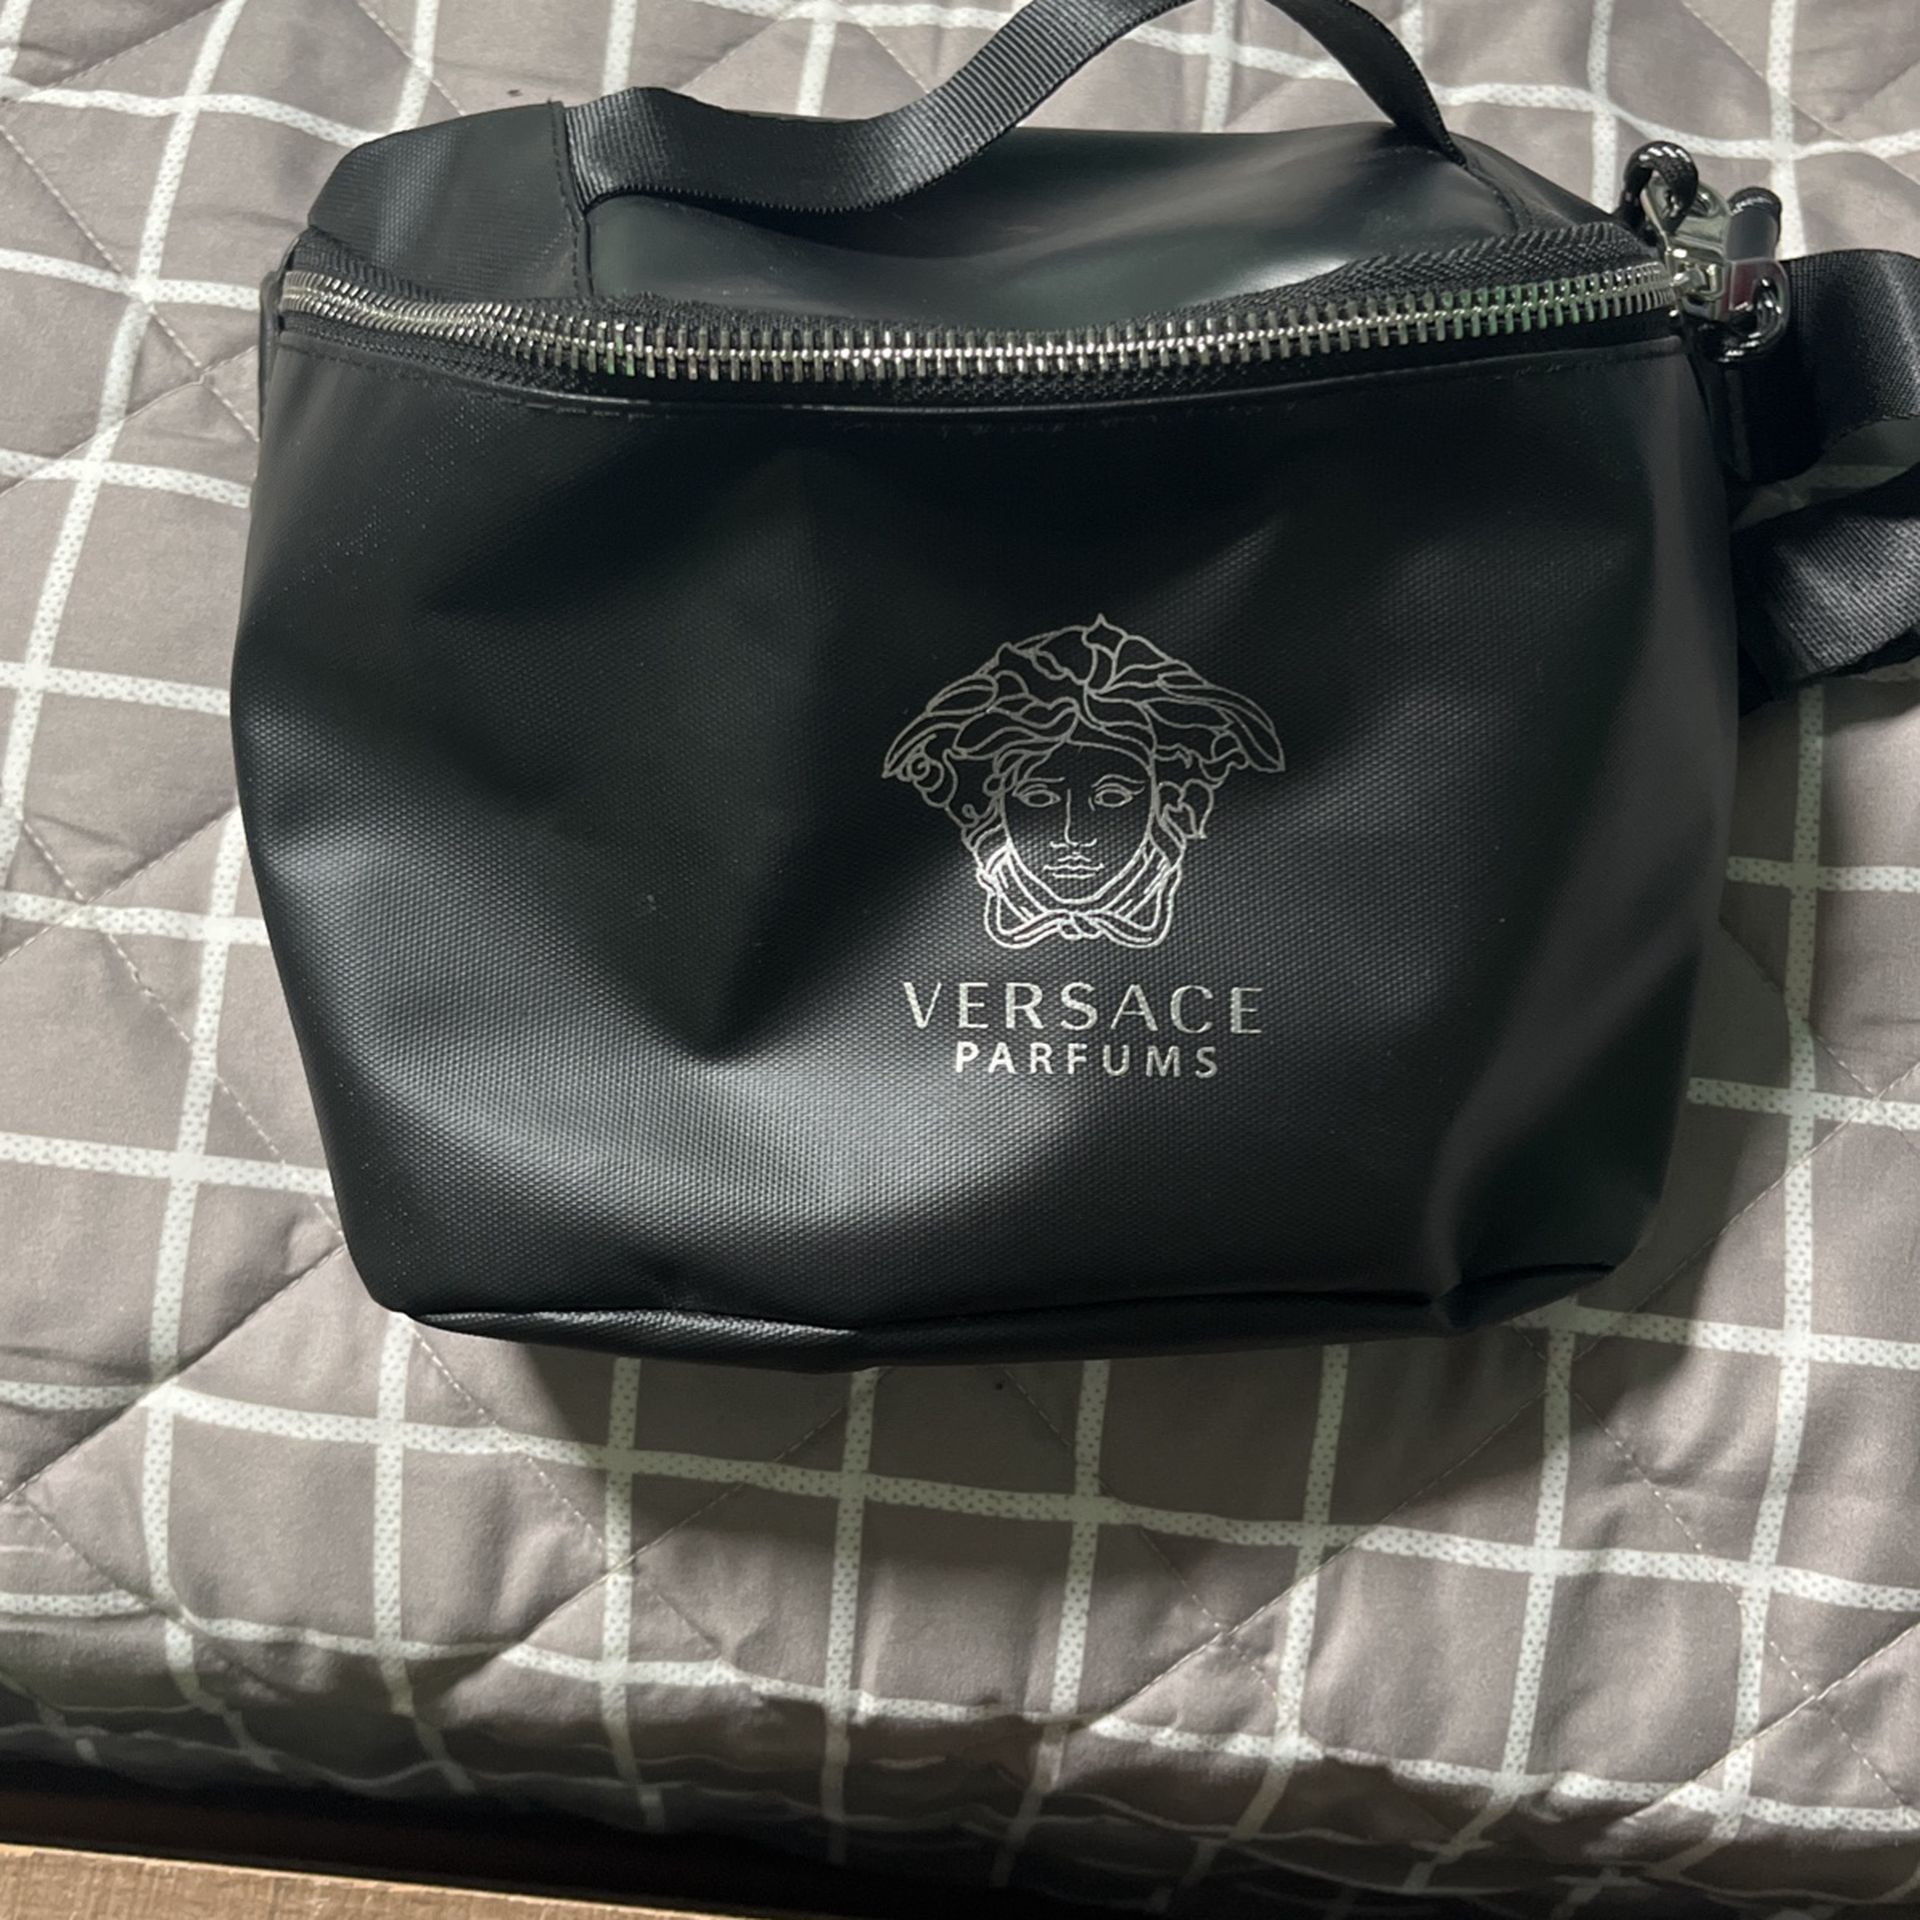 Versace Fanny Pack/bag